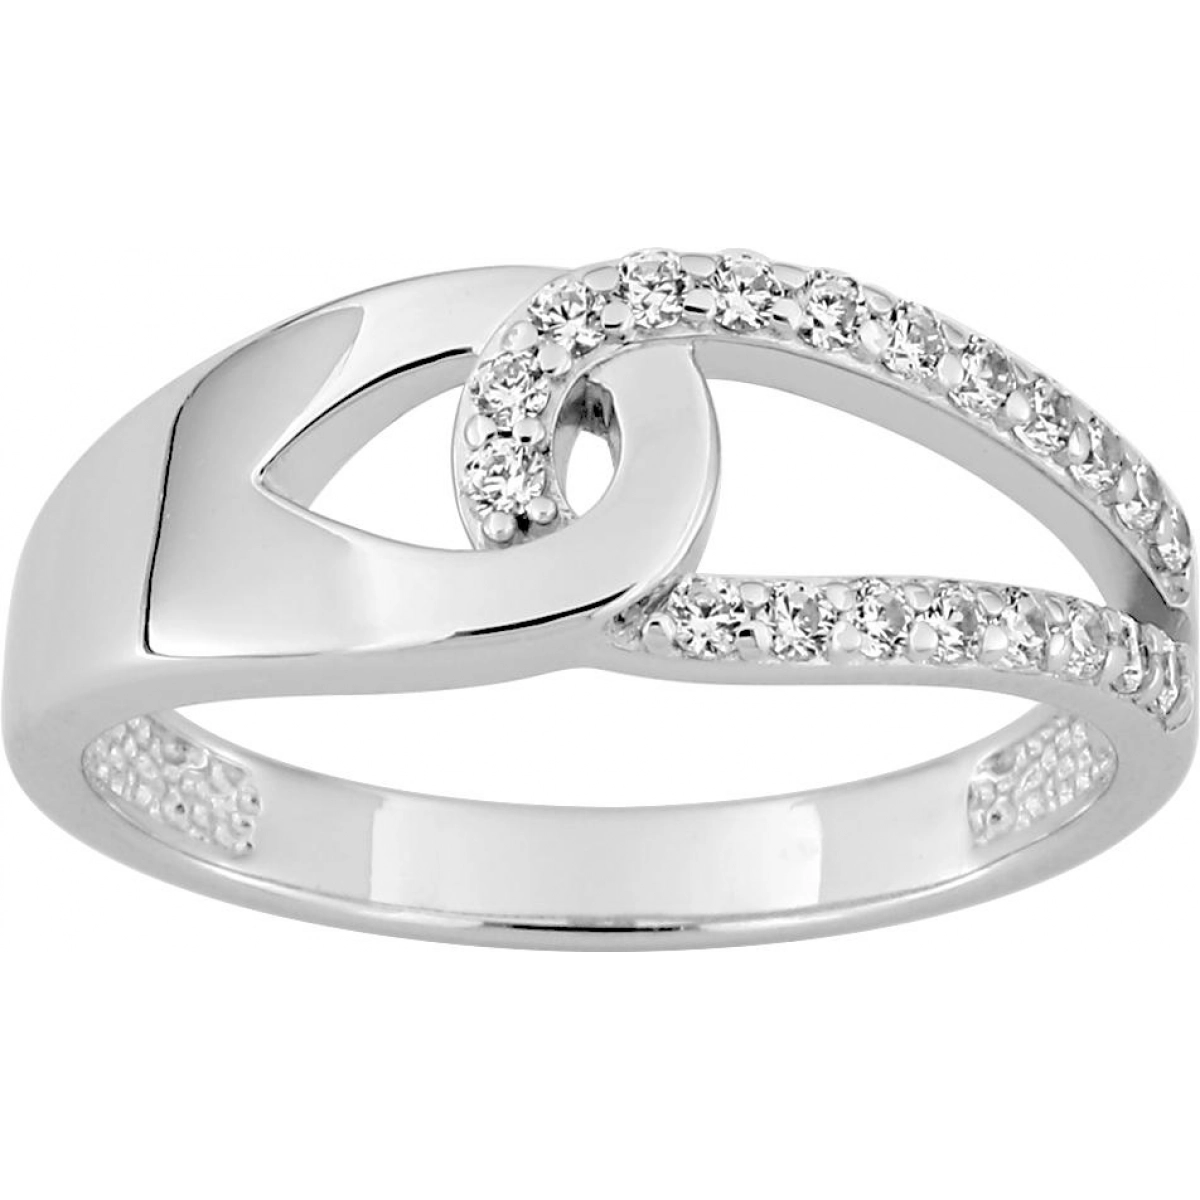 Ring w. cz rh925 Silver Lua Blanca  450450.9 - Size 50